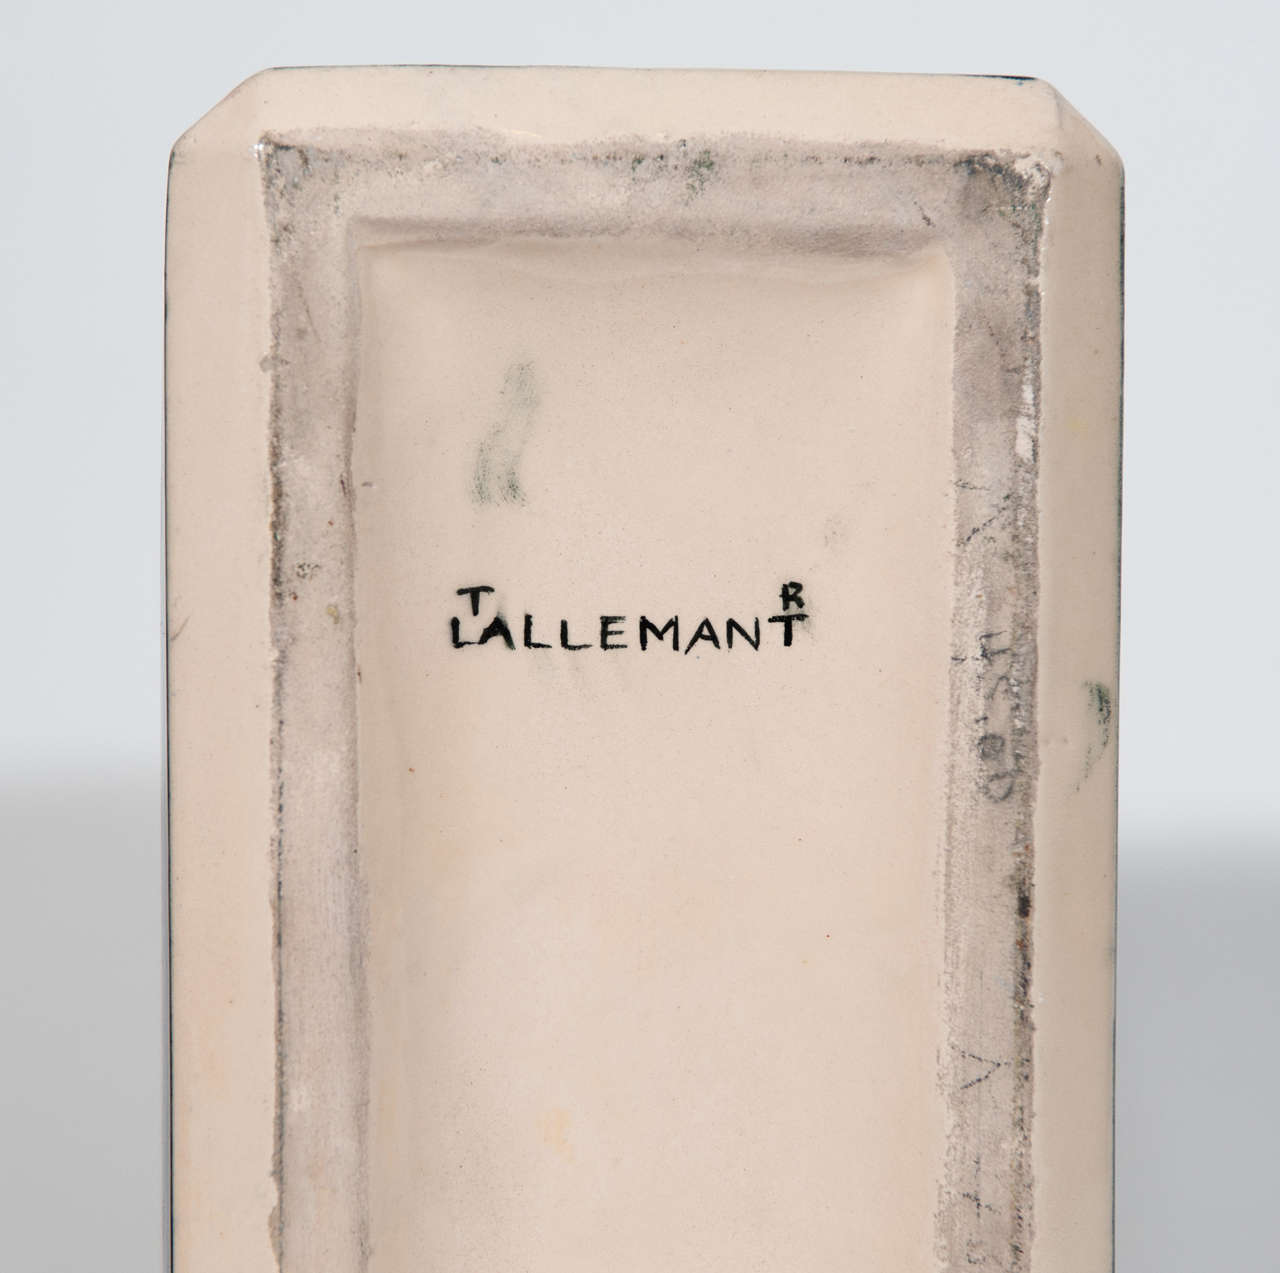 Mid-20th Century Monumental Art Deco Ceramic Vase by Robert Lallemant